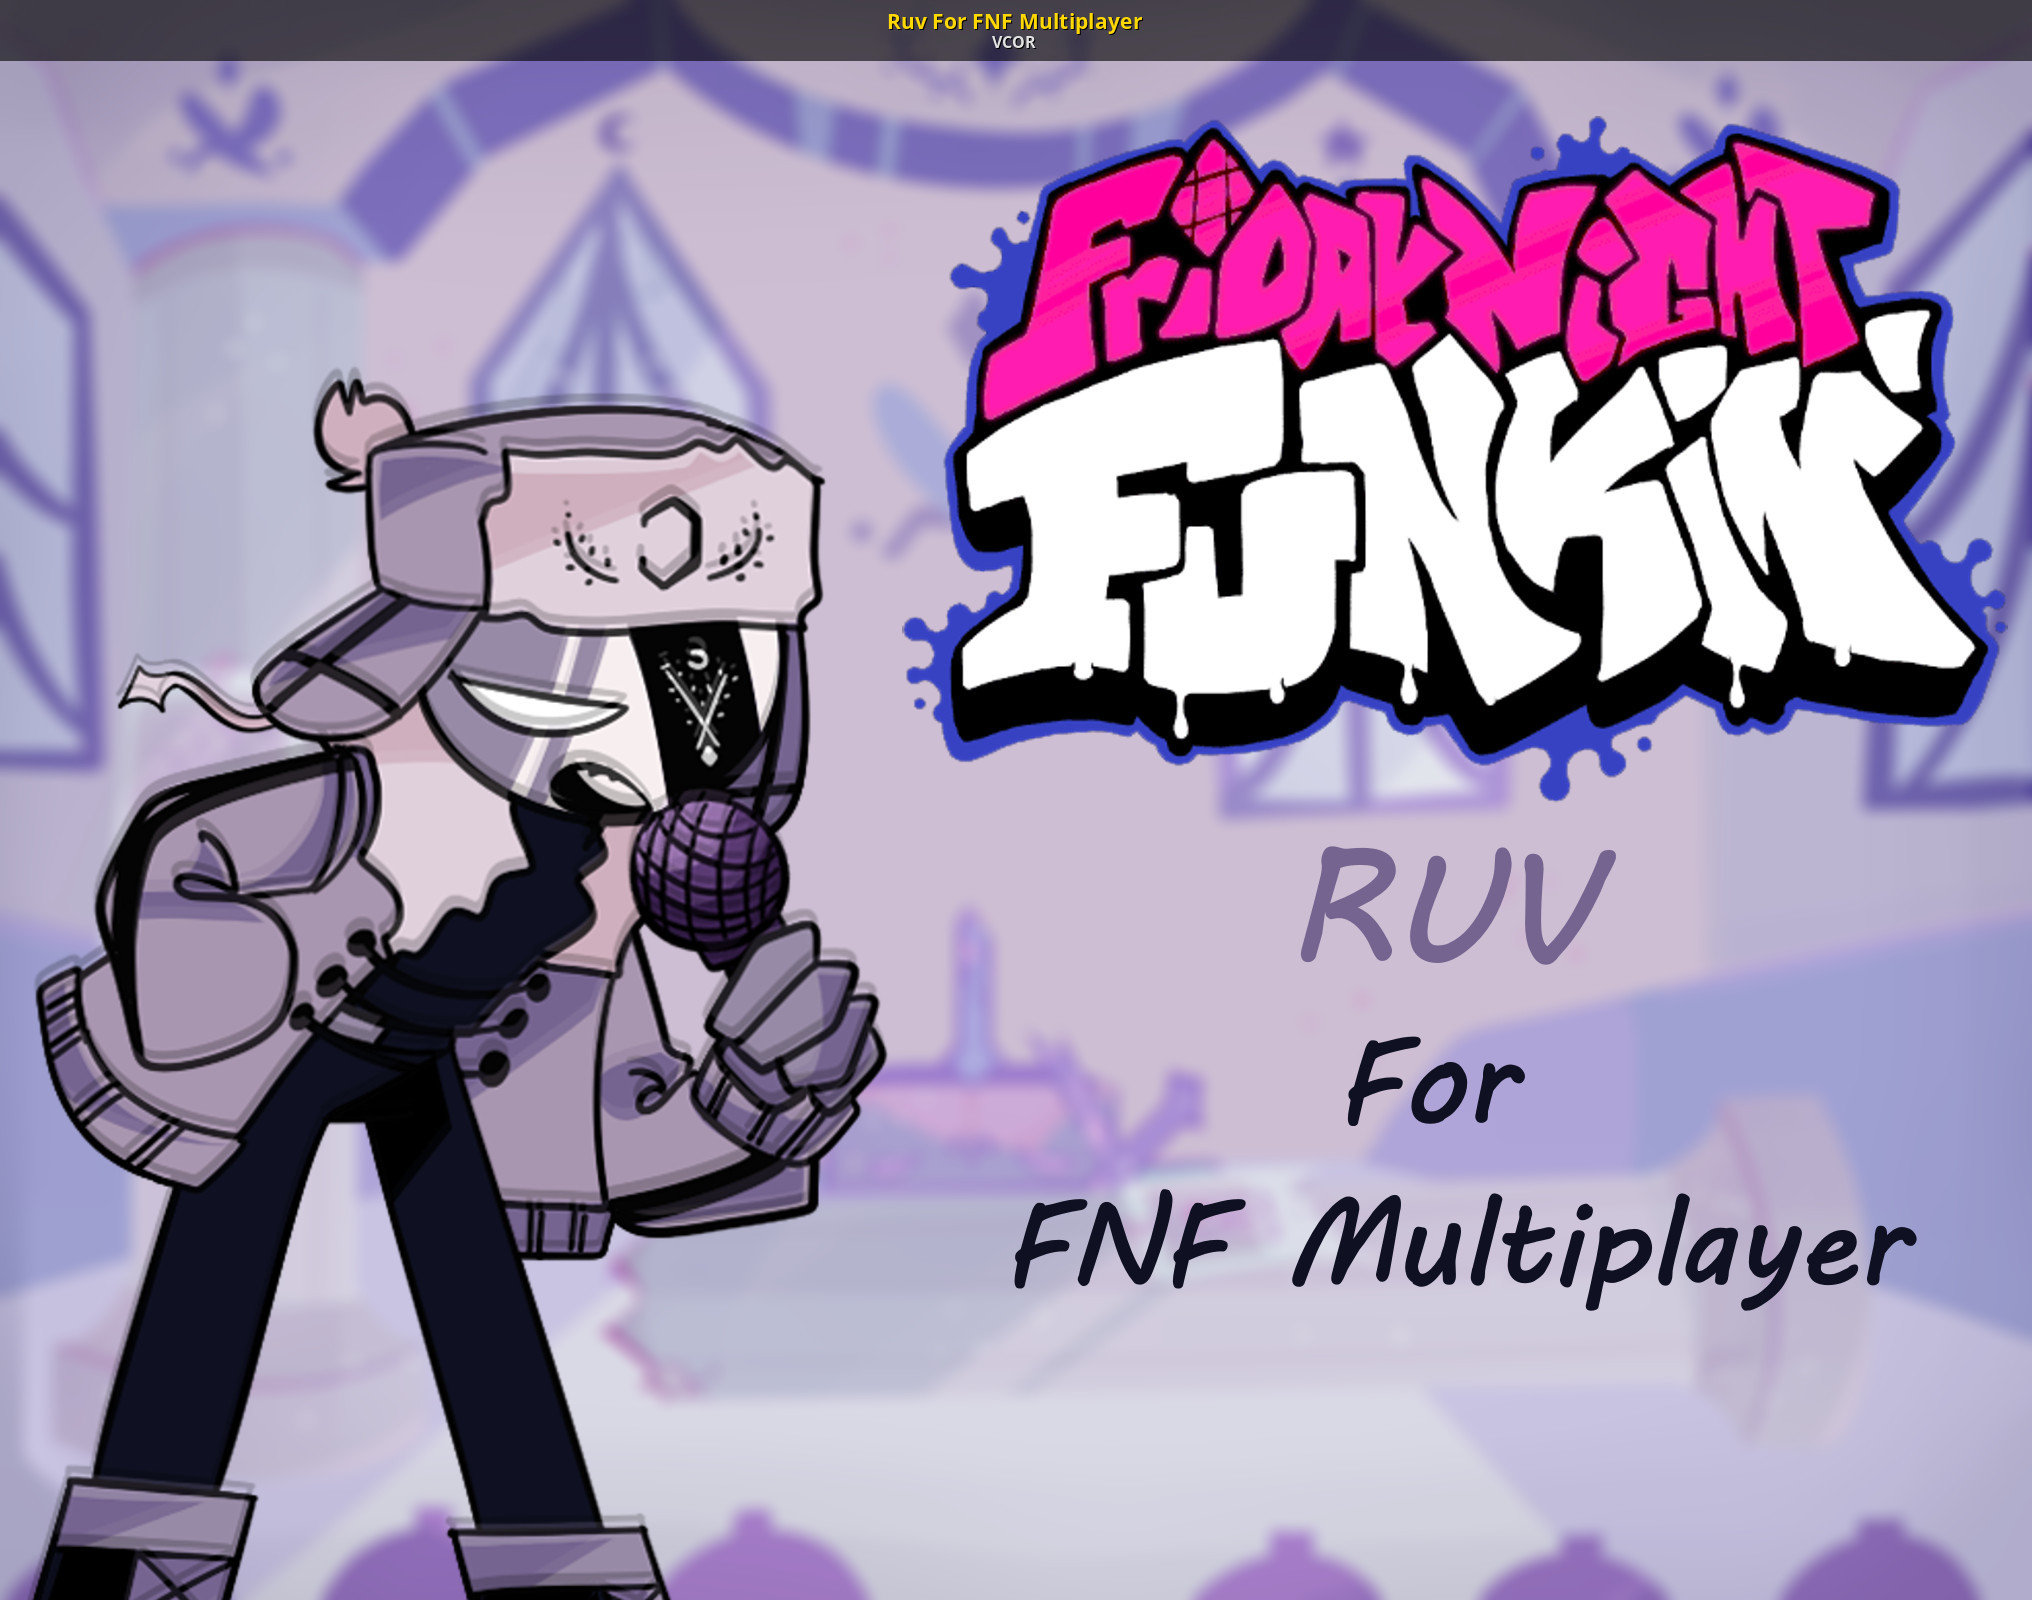 Fnf update. РУВ Фрайдей Найт Фанкин. Мультиплеер Фридей Найт Фанкин. FNF Mod РУВ. Friday Night Funkin Multiplayer.